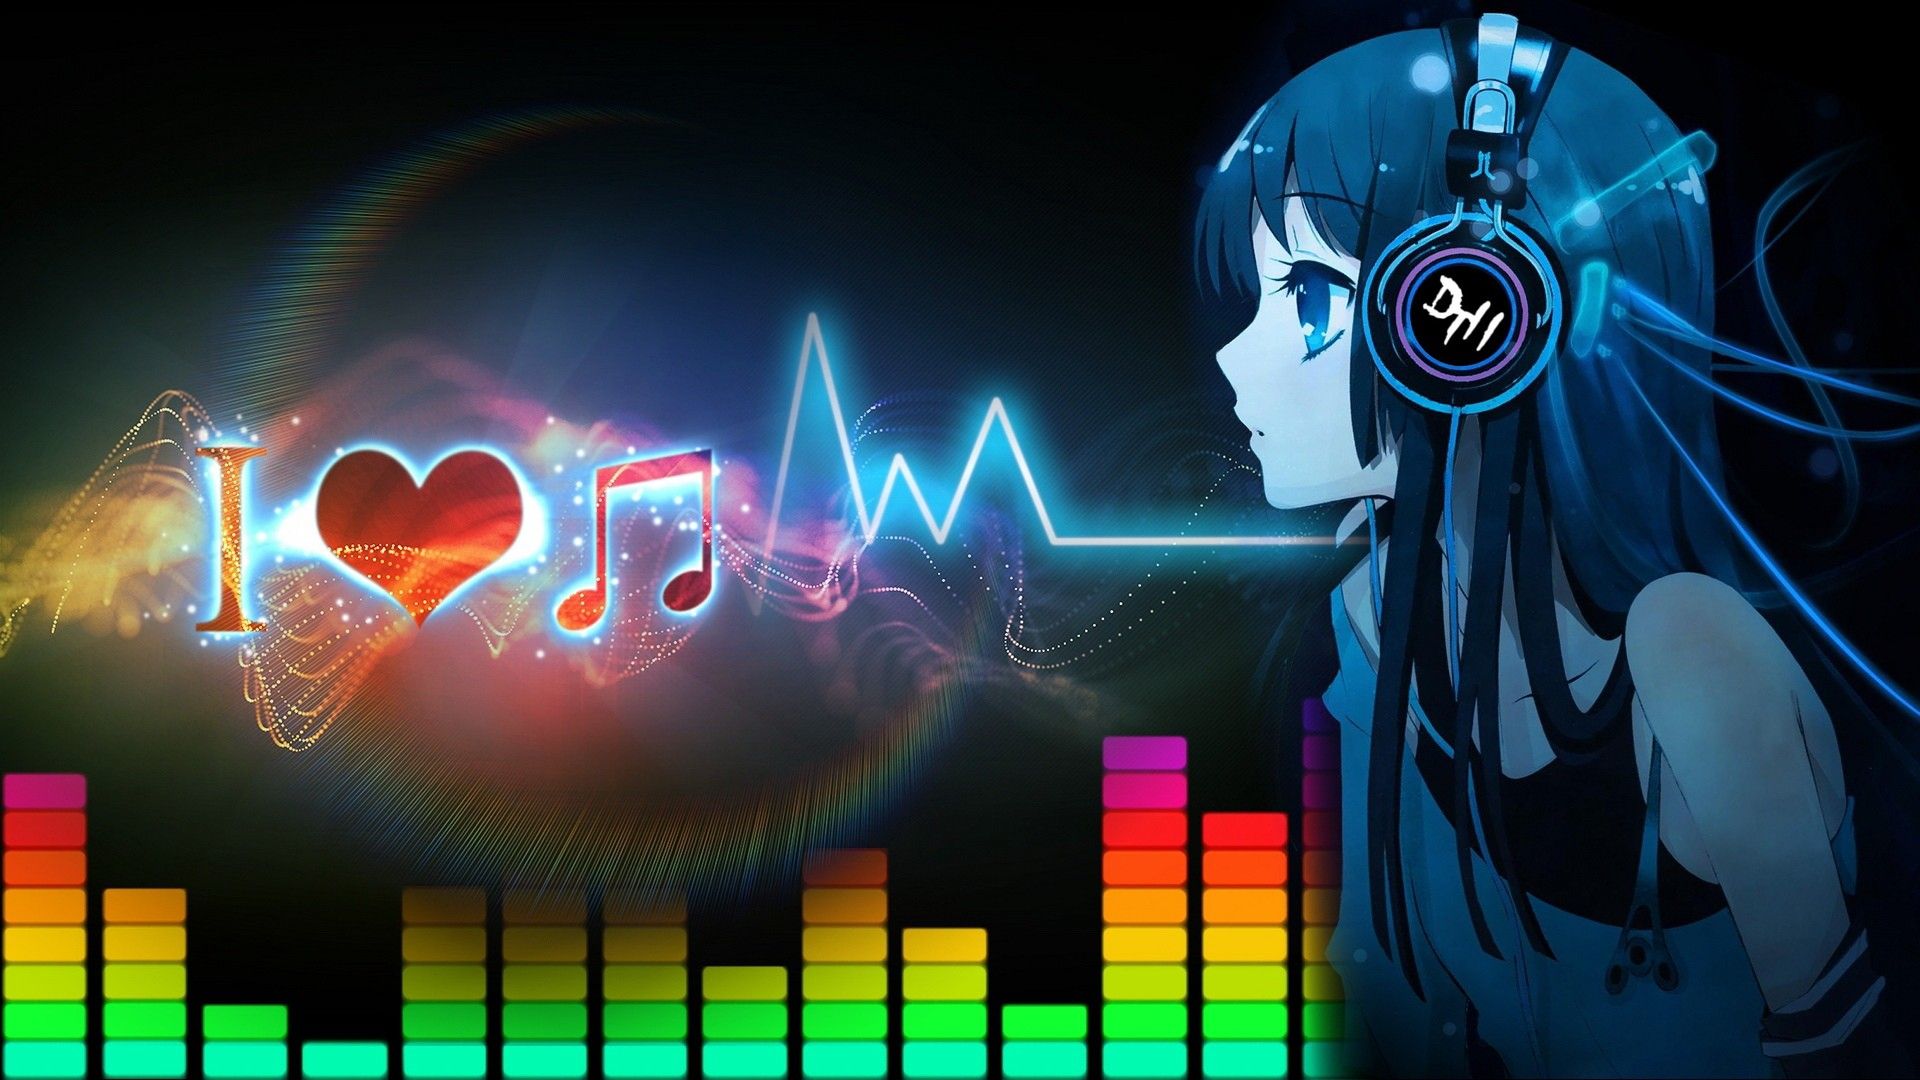 Pixel Art Anime Girl With Headphones